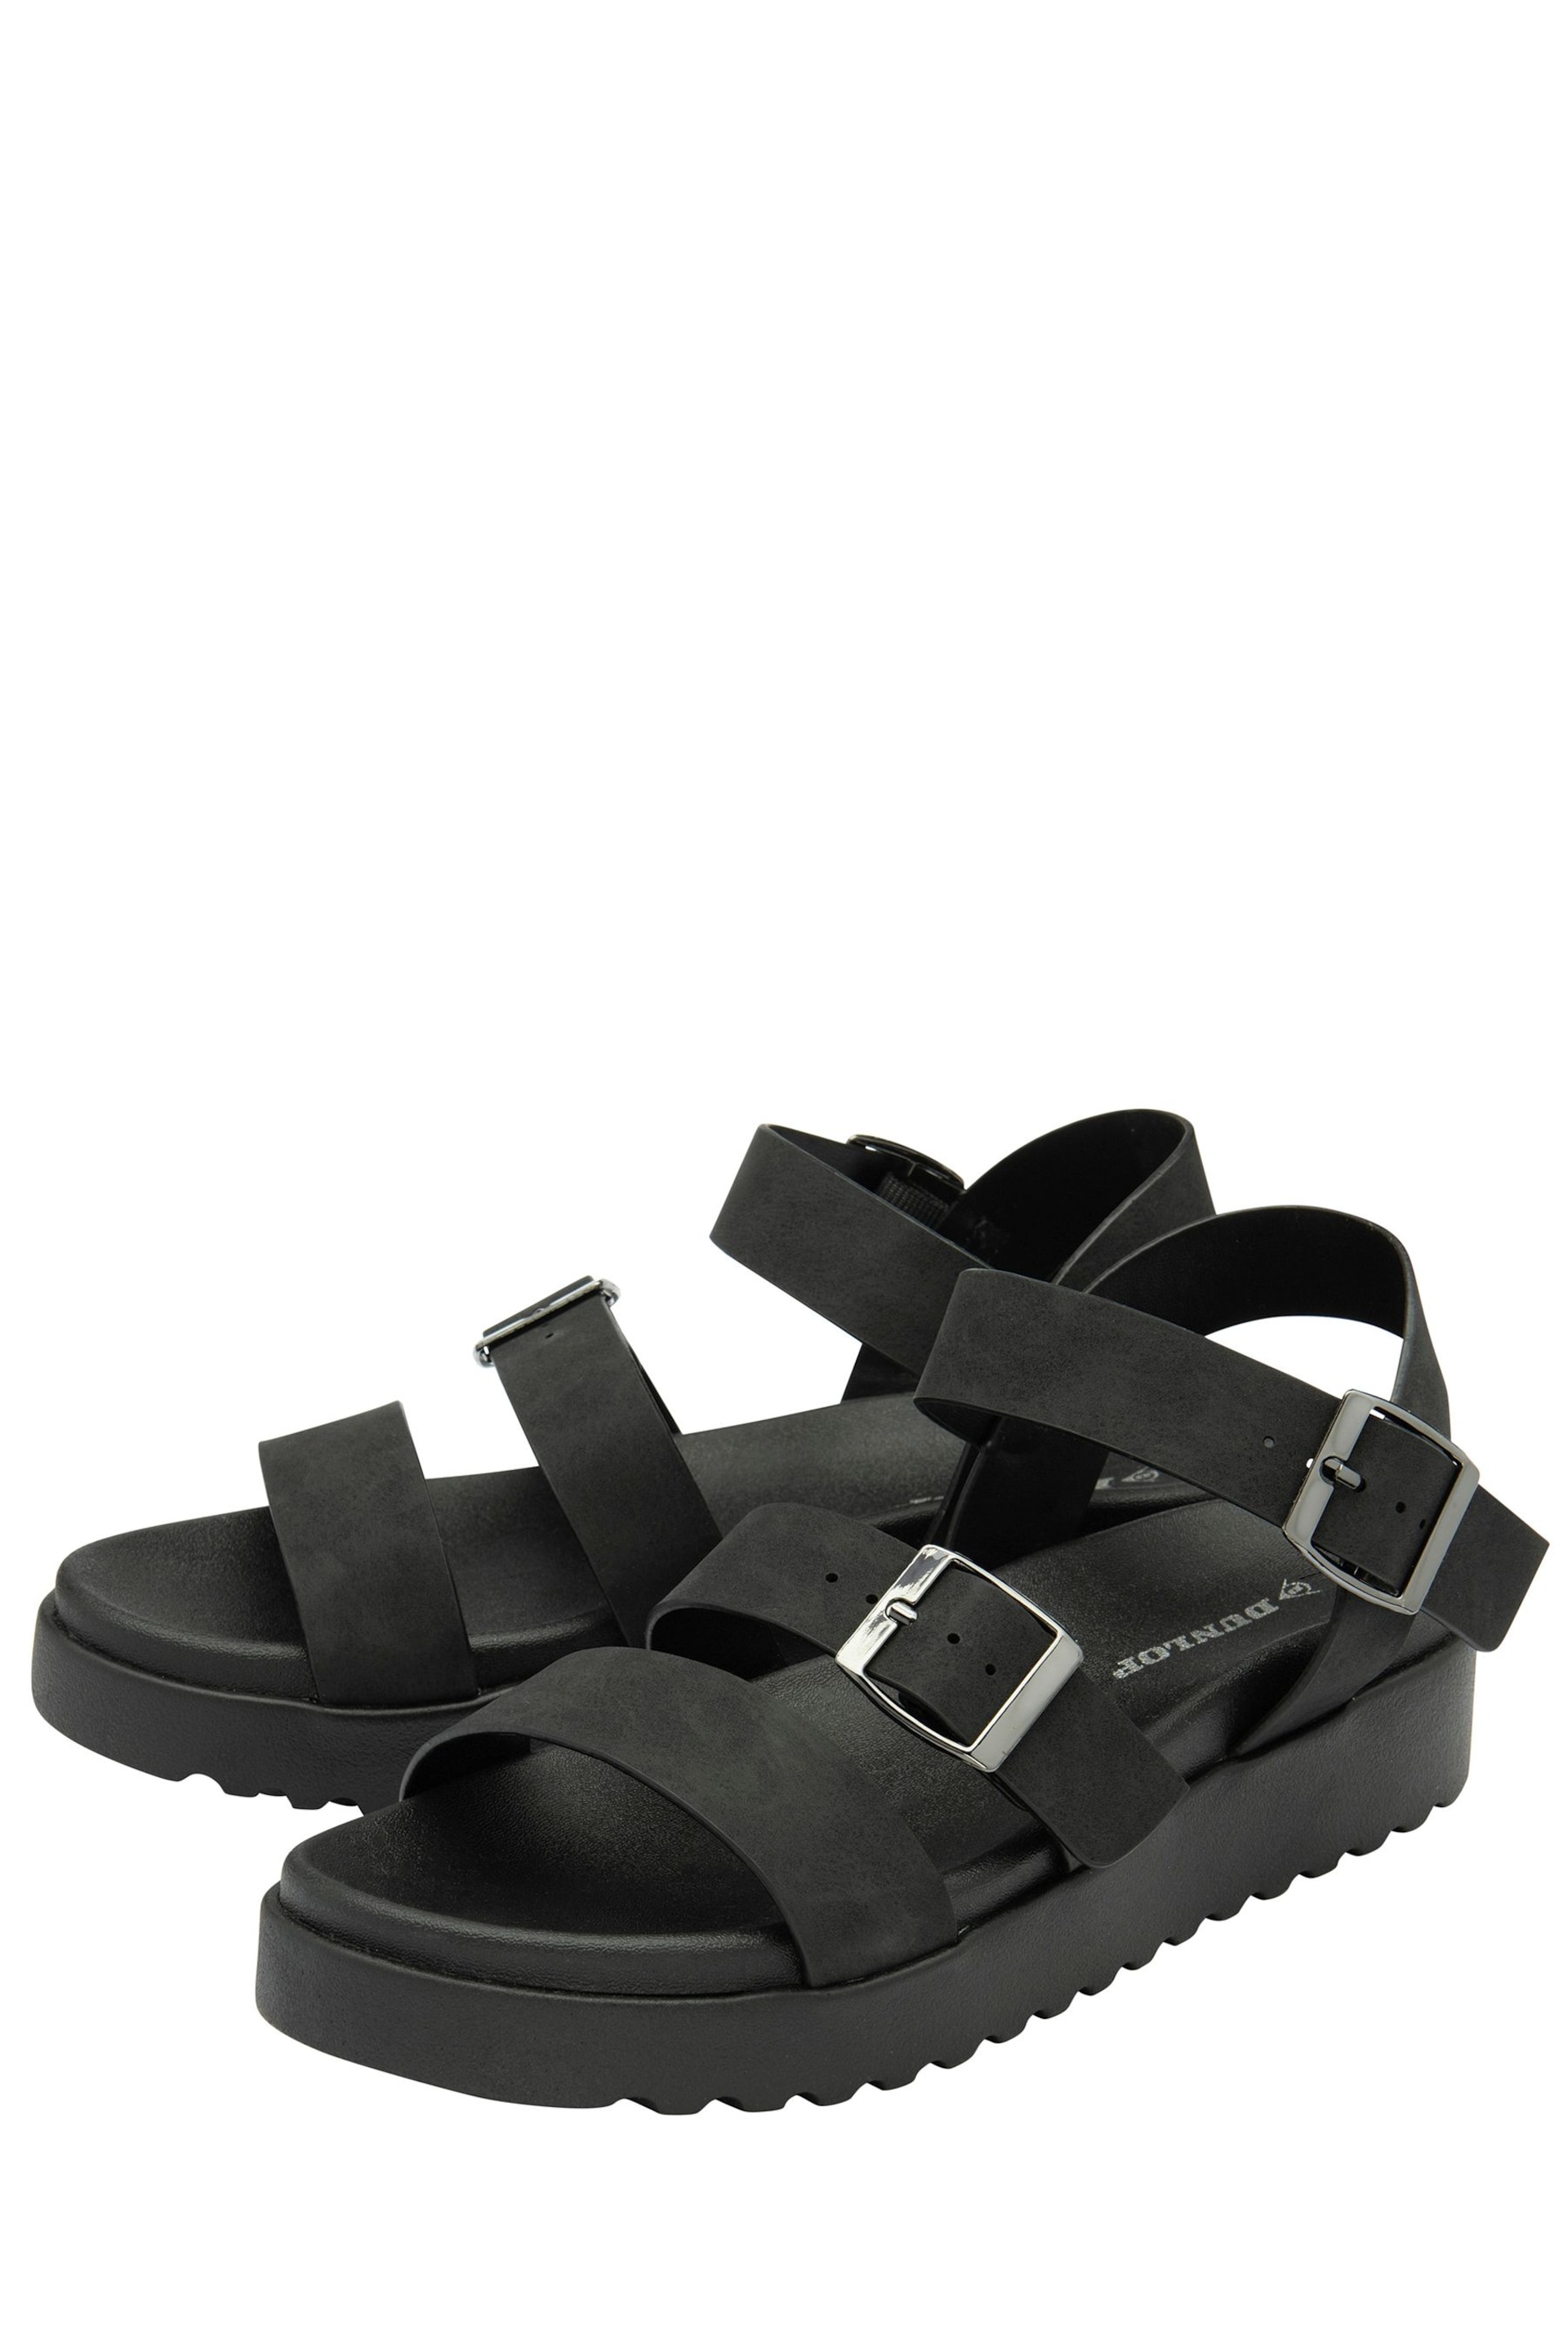 Dunlop Black Ladies Flatform Sandals - Image 2 of 4